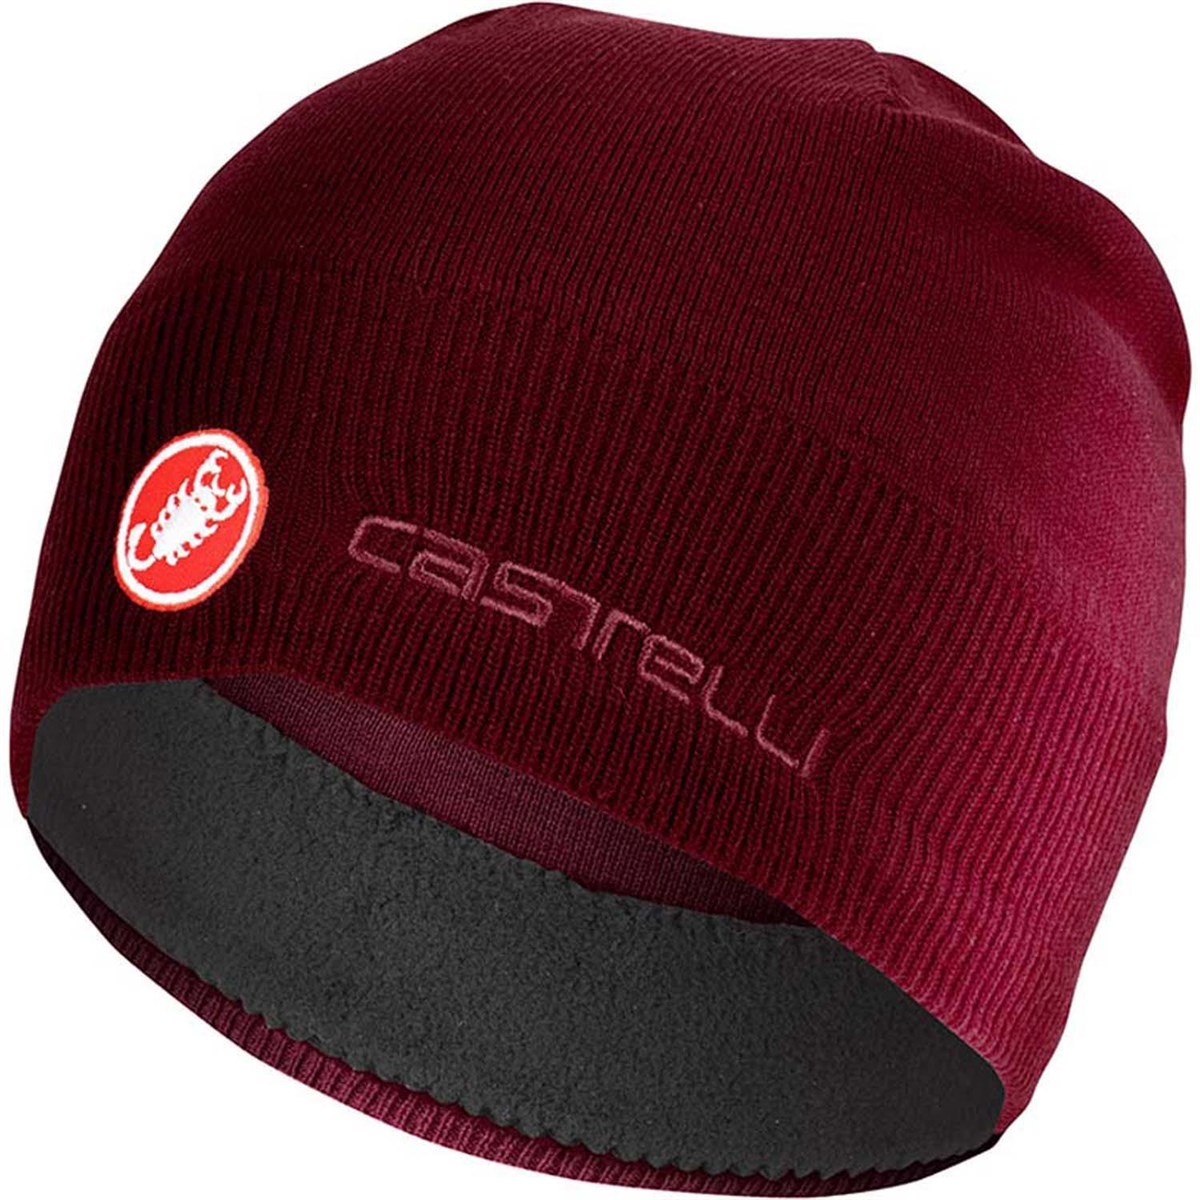 Castelli GPM Beanie product image